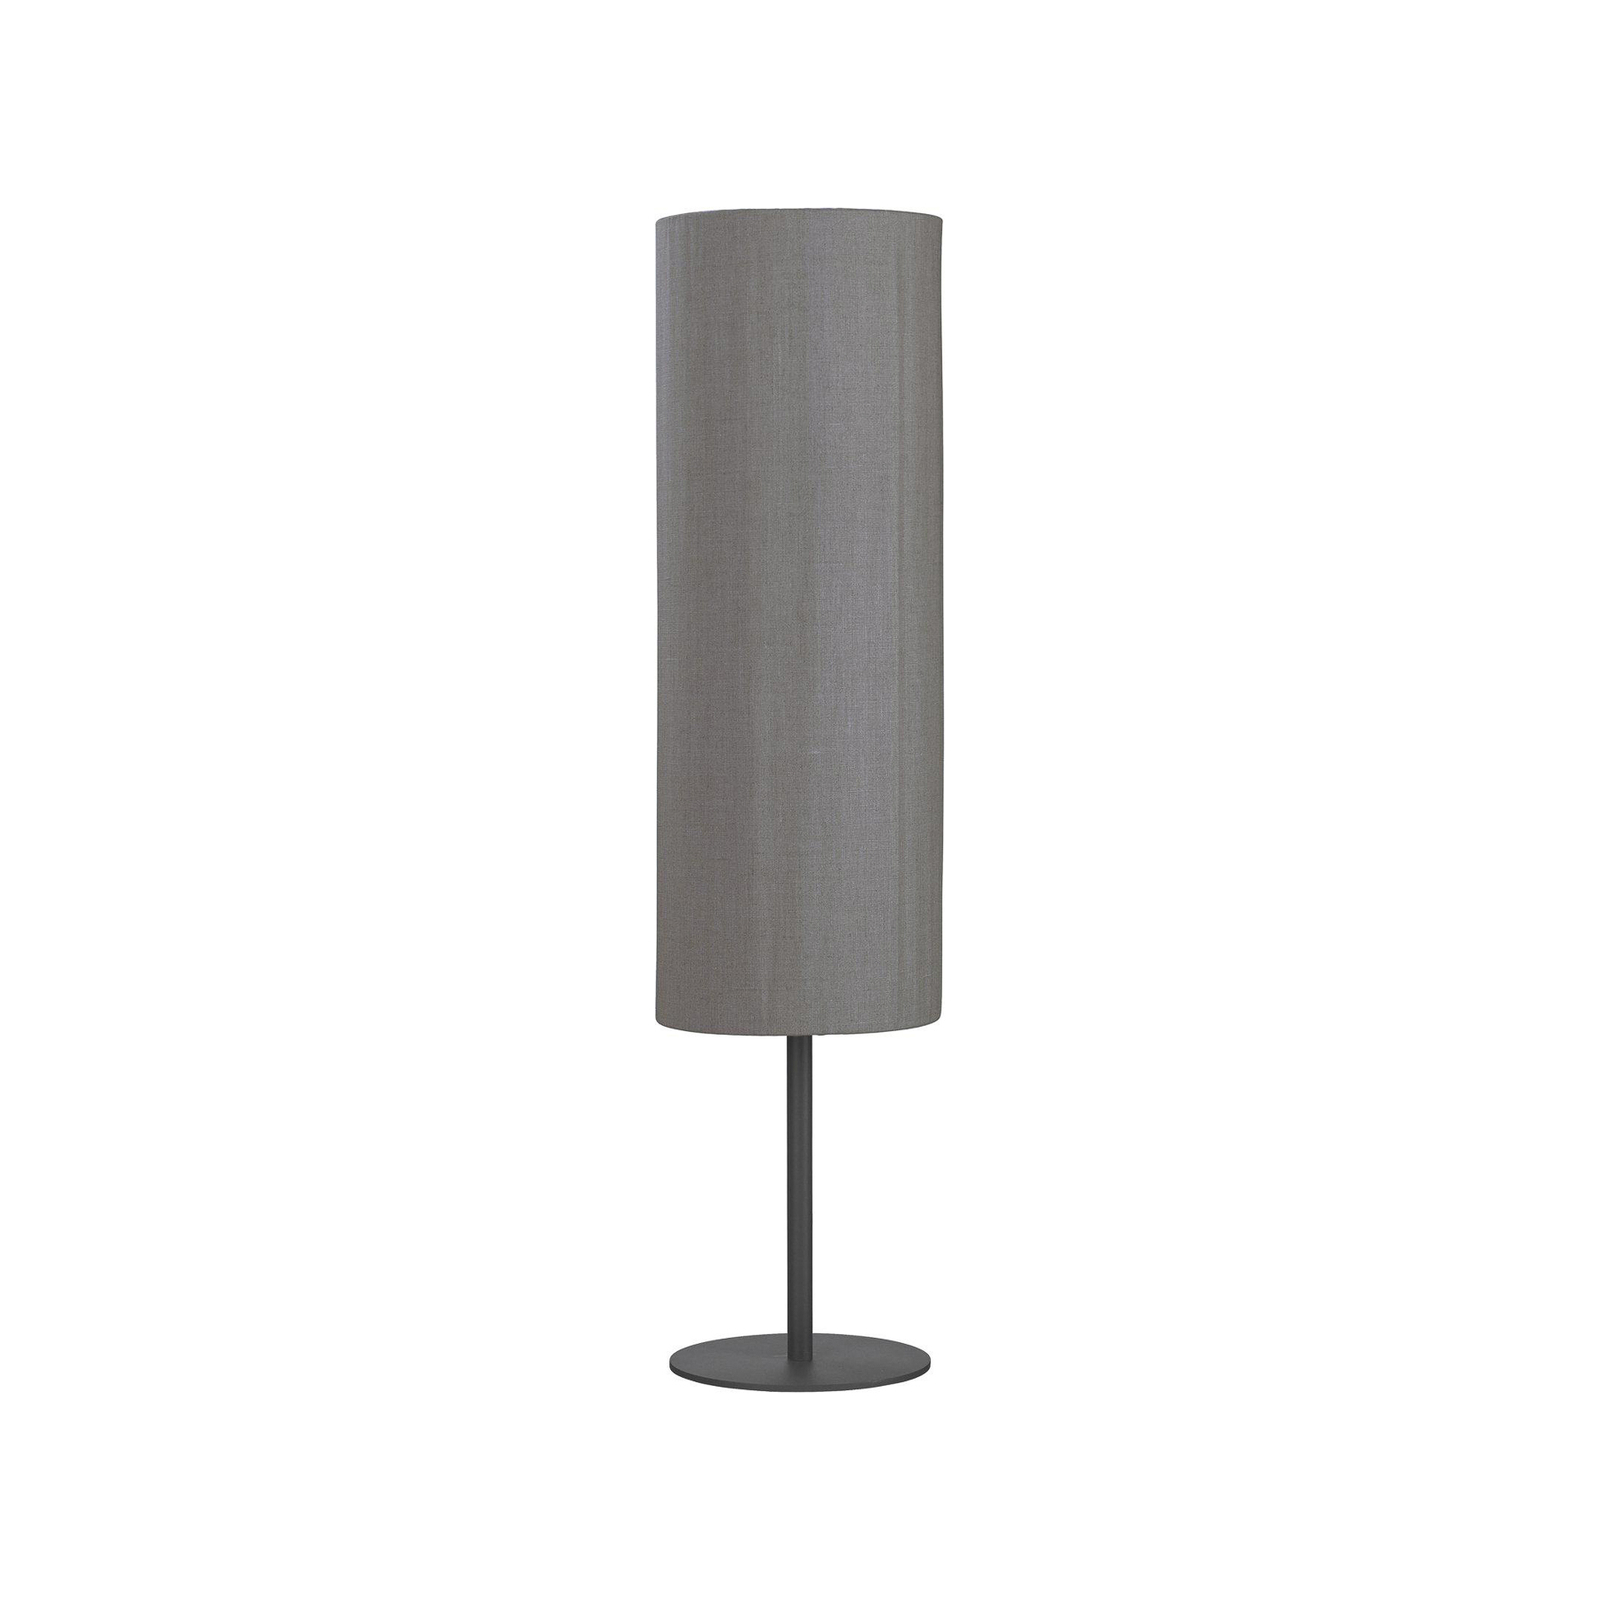 PR Home външна подова лампа Agnar, тъмно сиво / кафяво, 100 cm